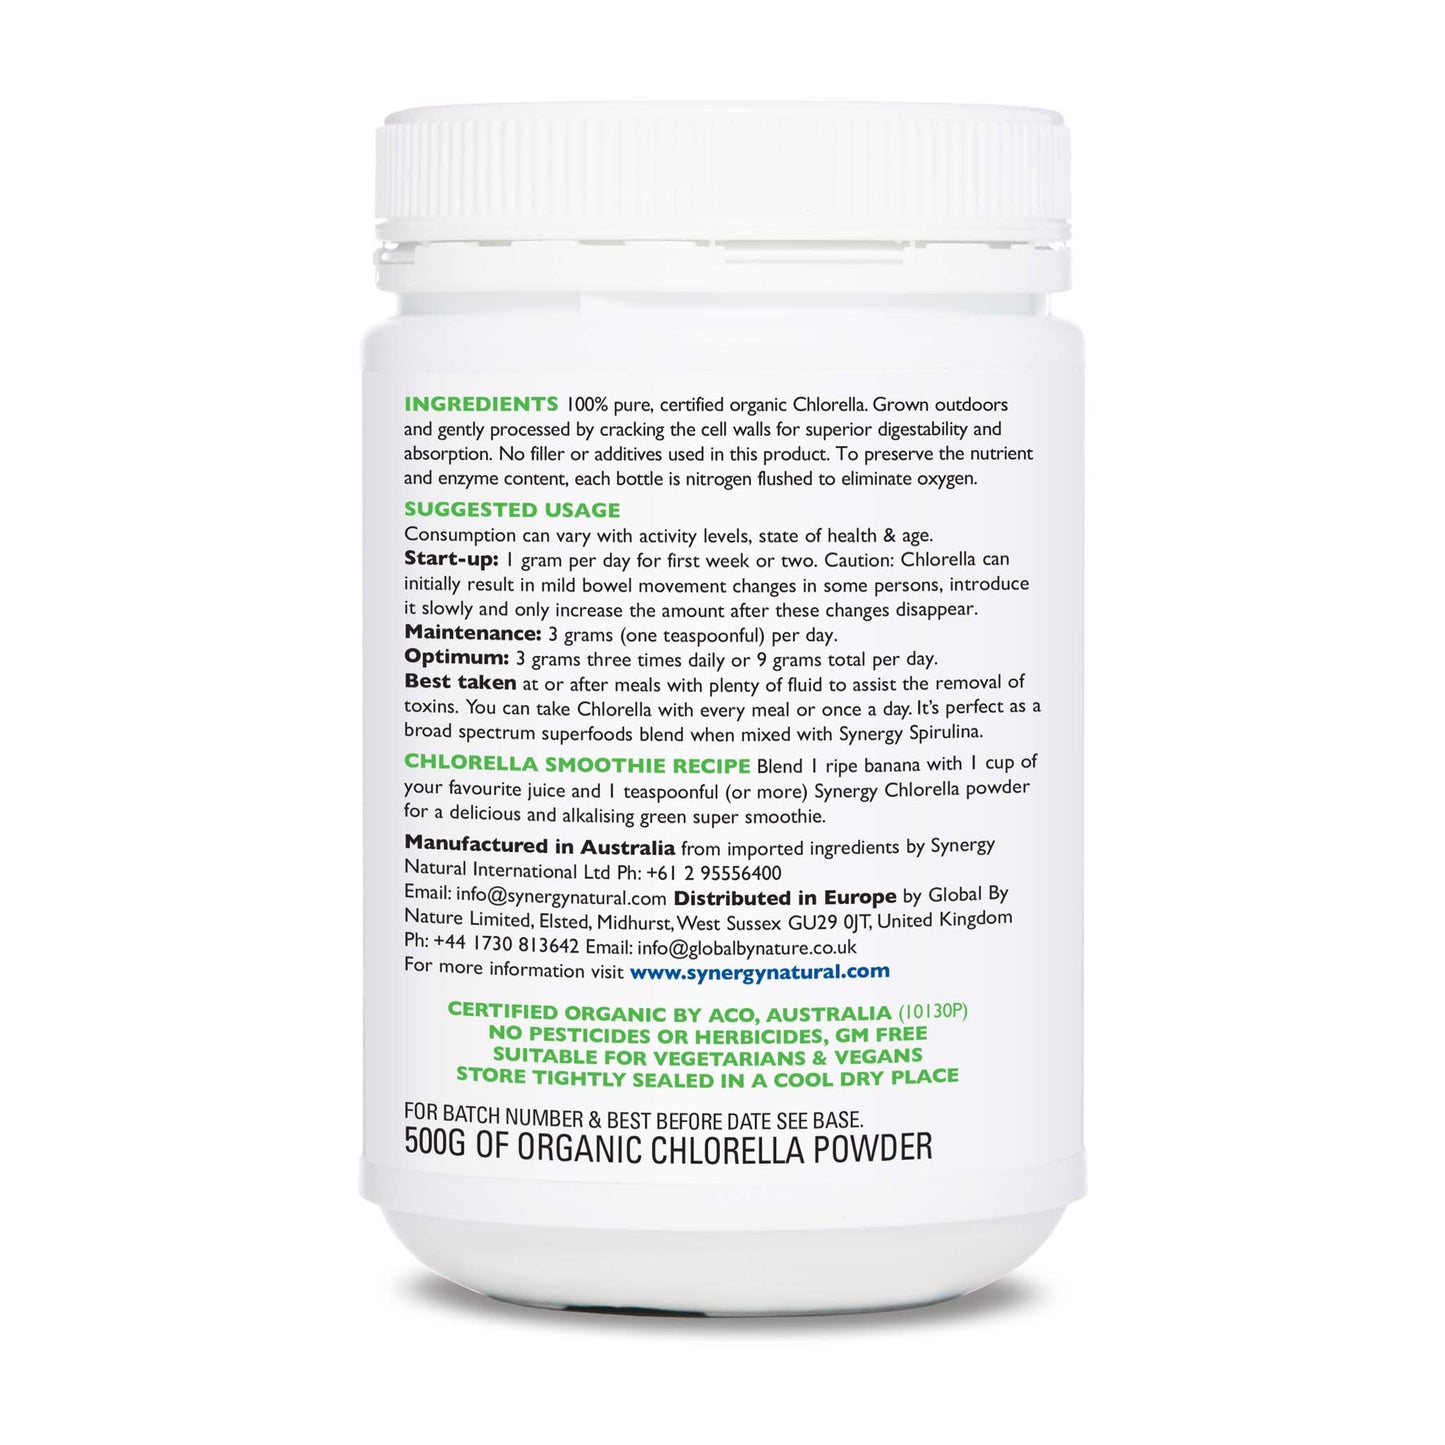 Synergy Natural Organic Chlorella 500g Powder